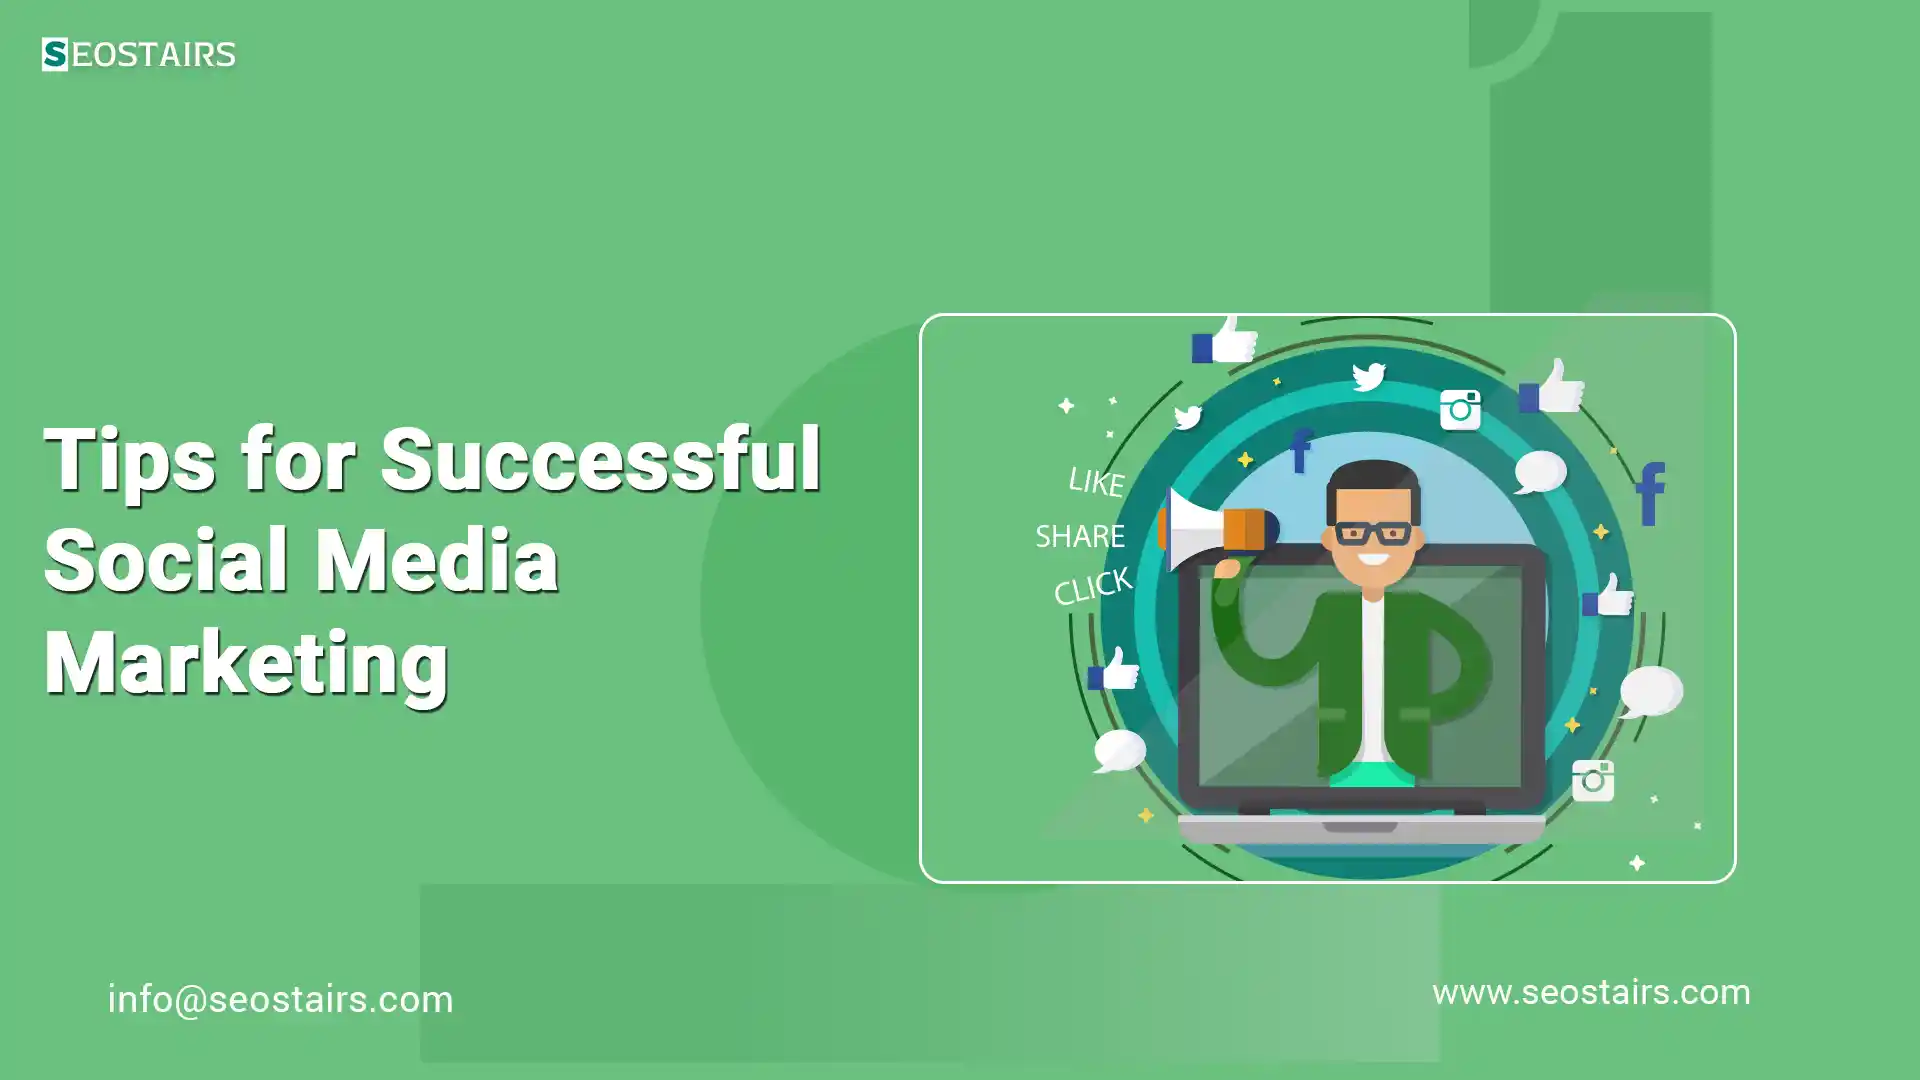 Tips for Social Media Marketing